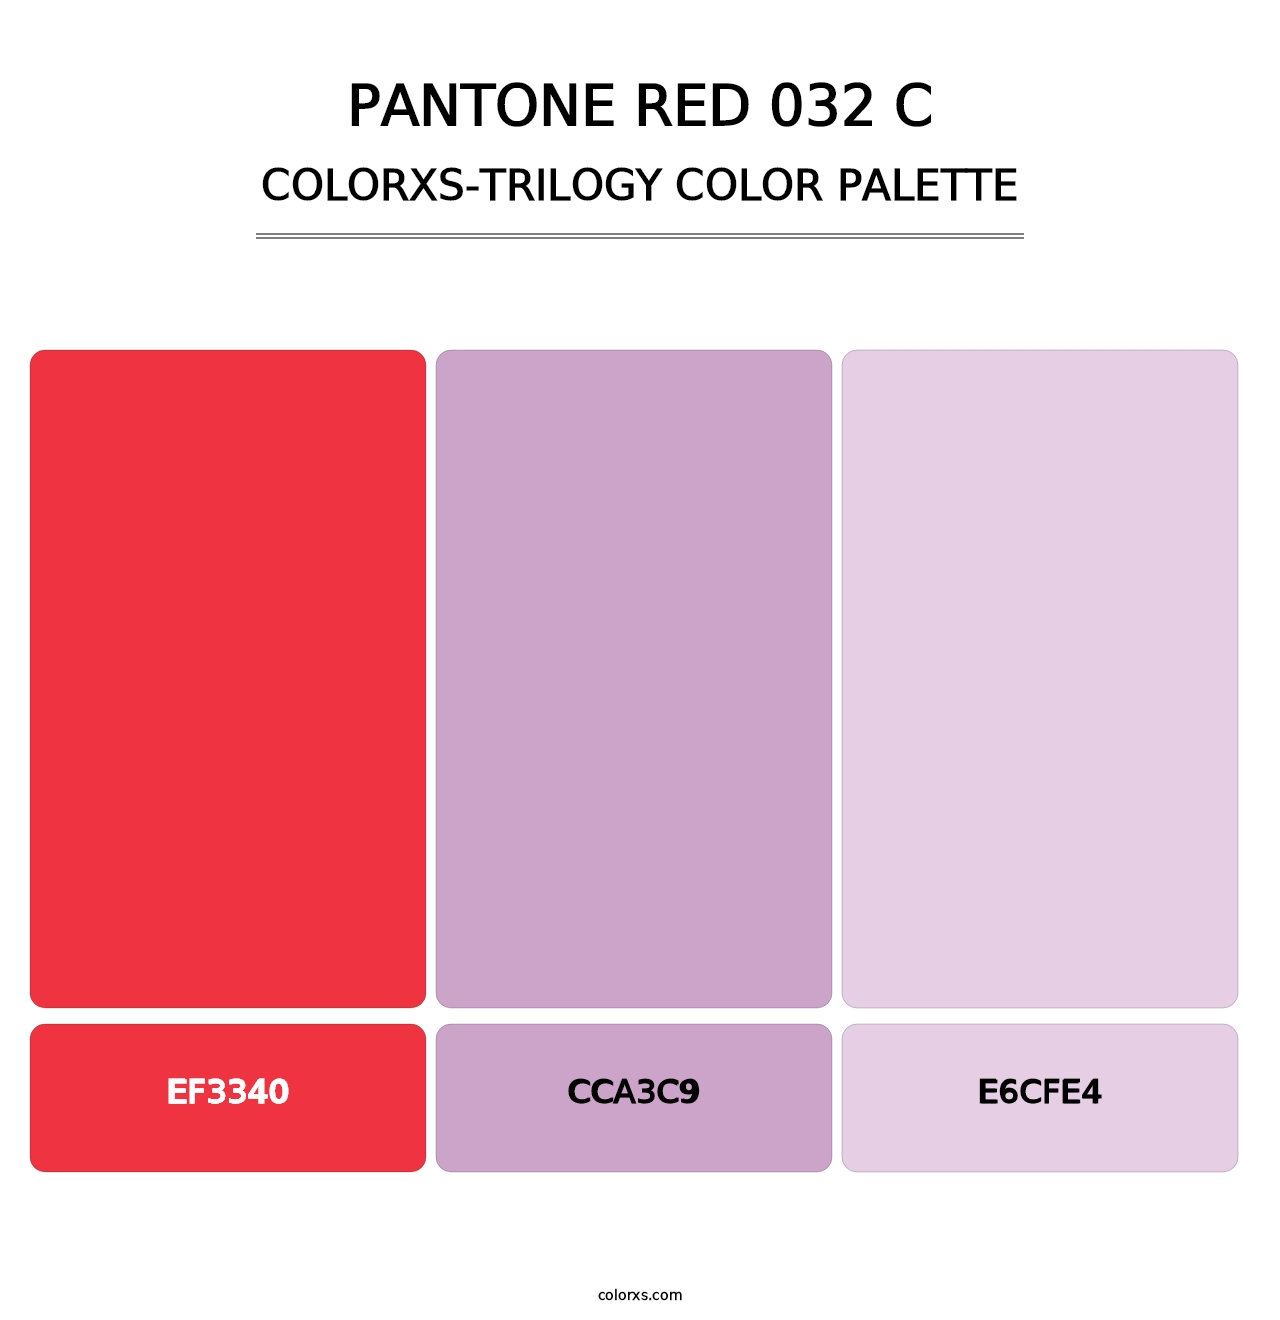 PANTONE Red 032 C - Colorxs Trilogy Palette